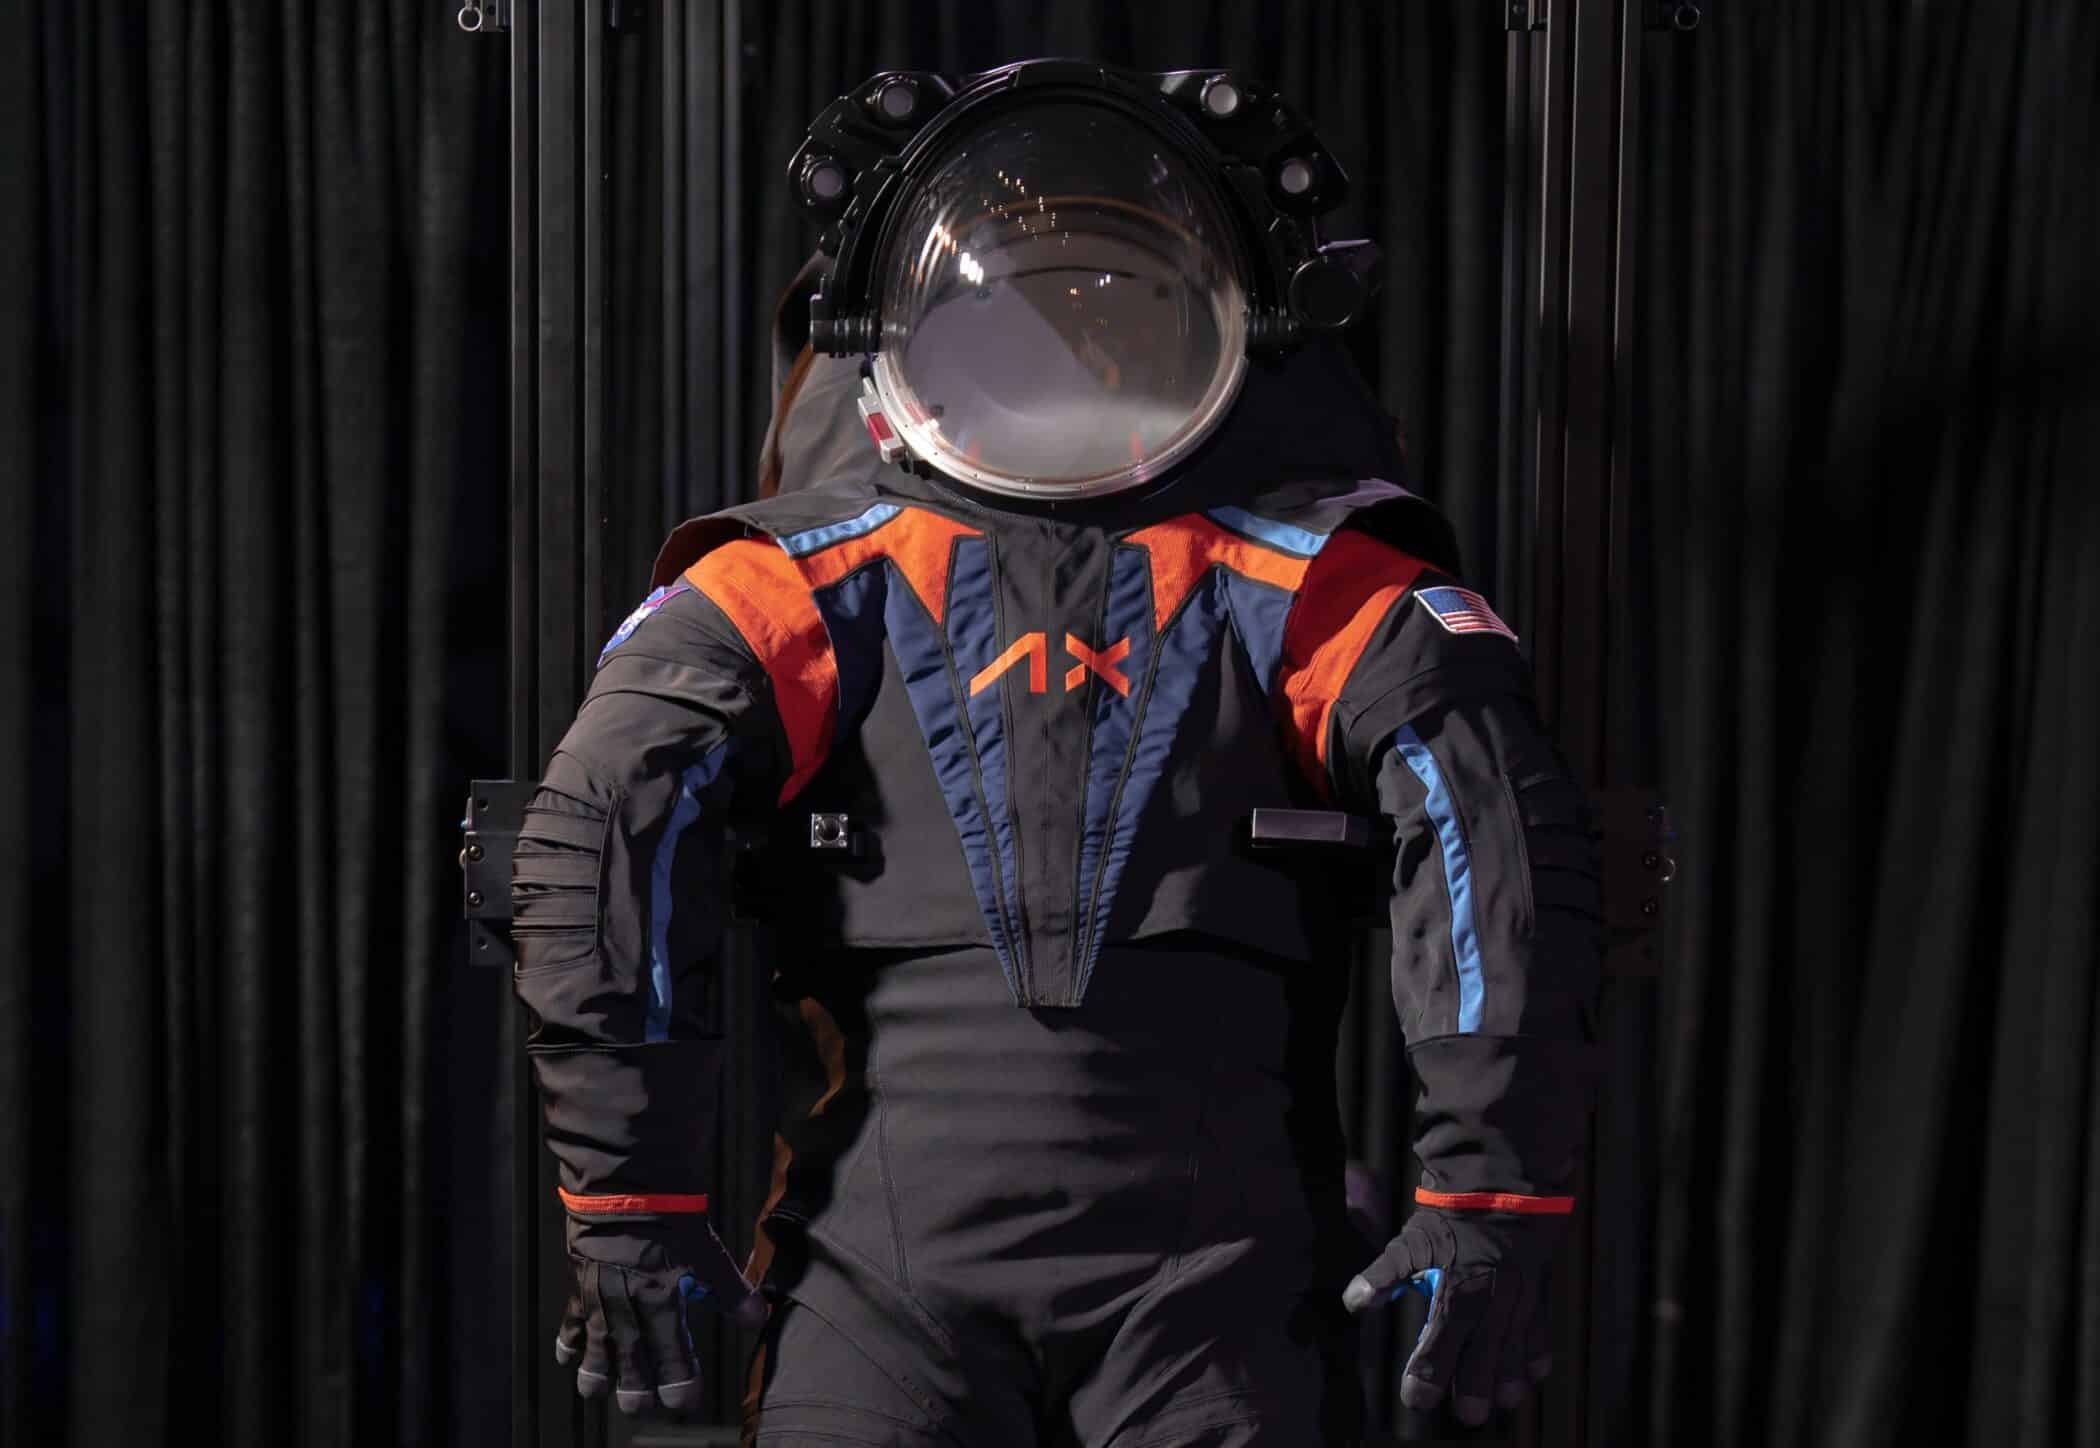 NASAとAxiom Space、月で着用する宇宙服を一部公開